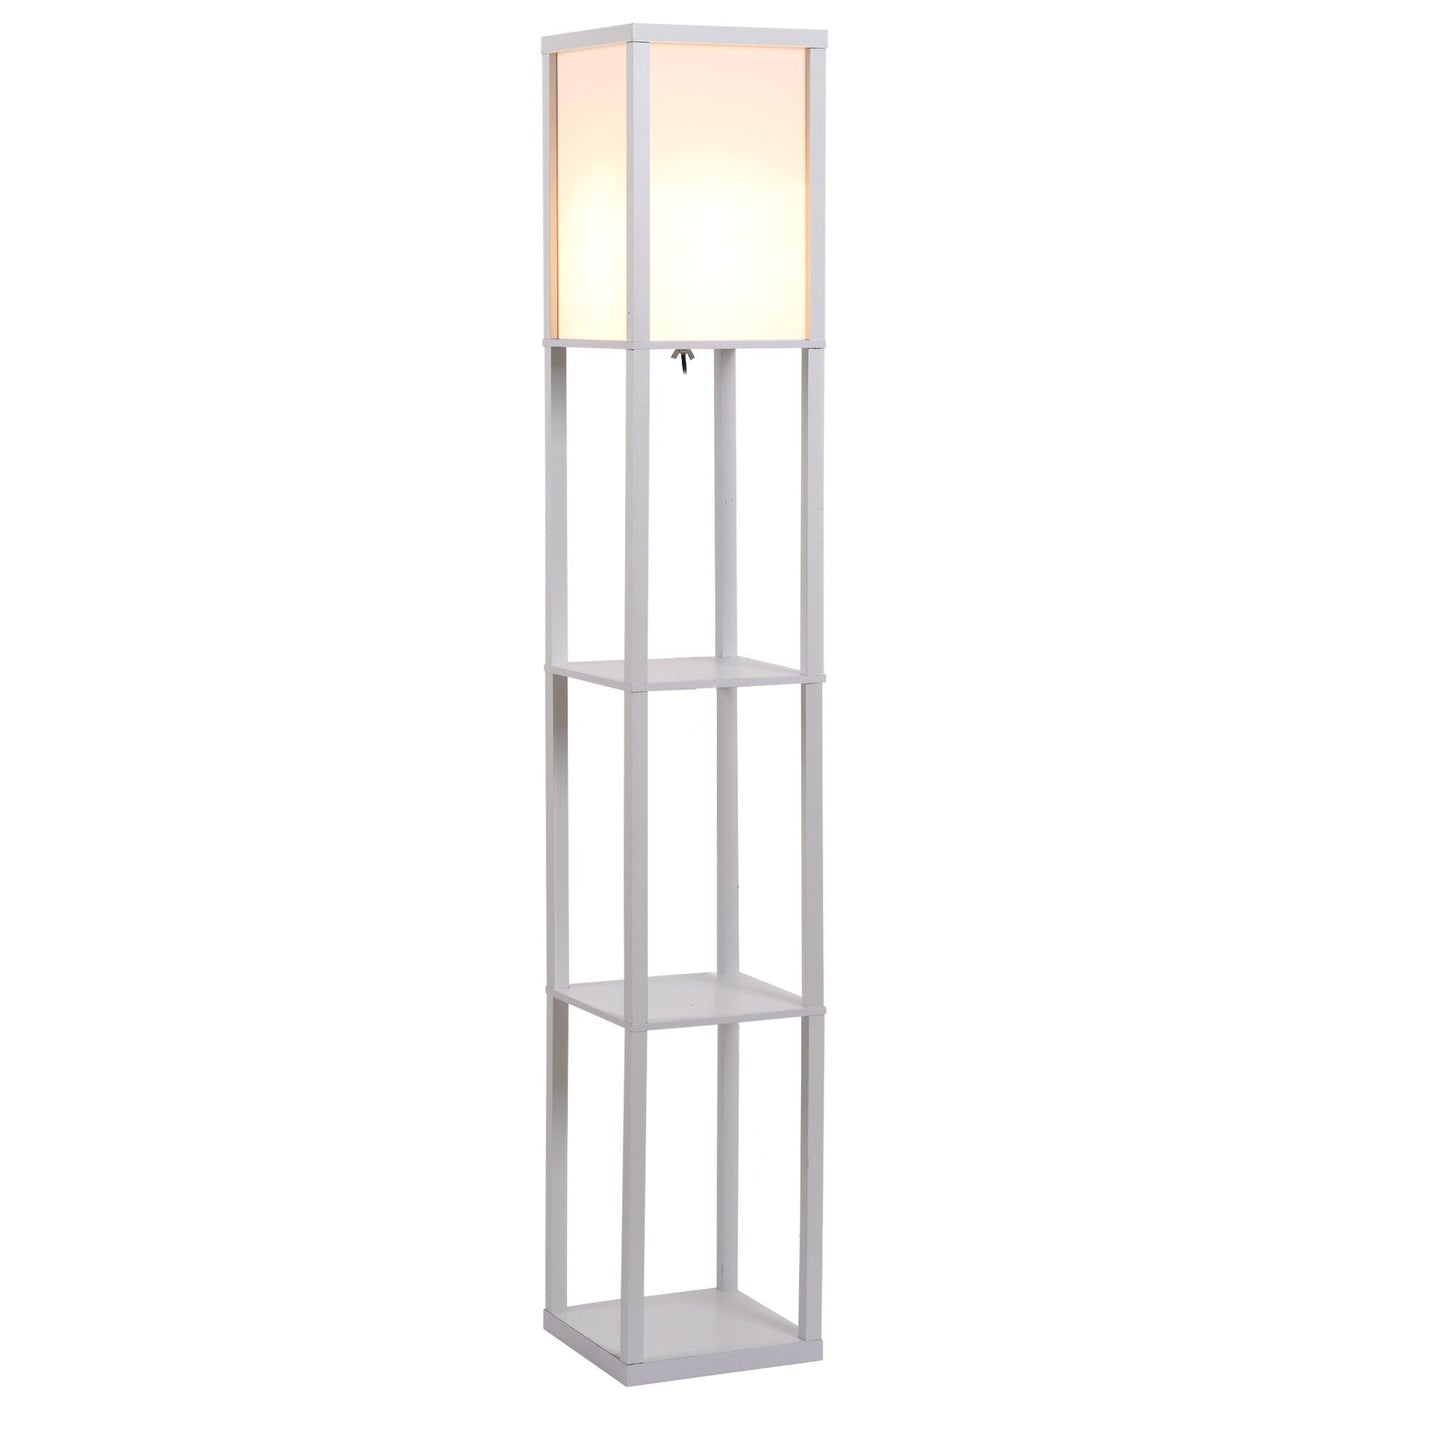 HOMCOM Standing Lamp, Floor Light with 4-Tier Storage Shelf, White